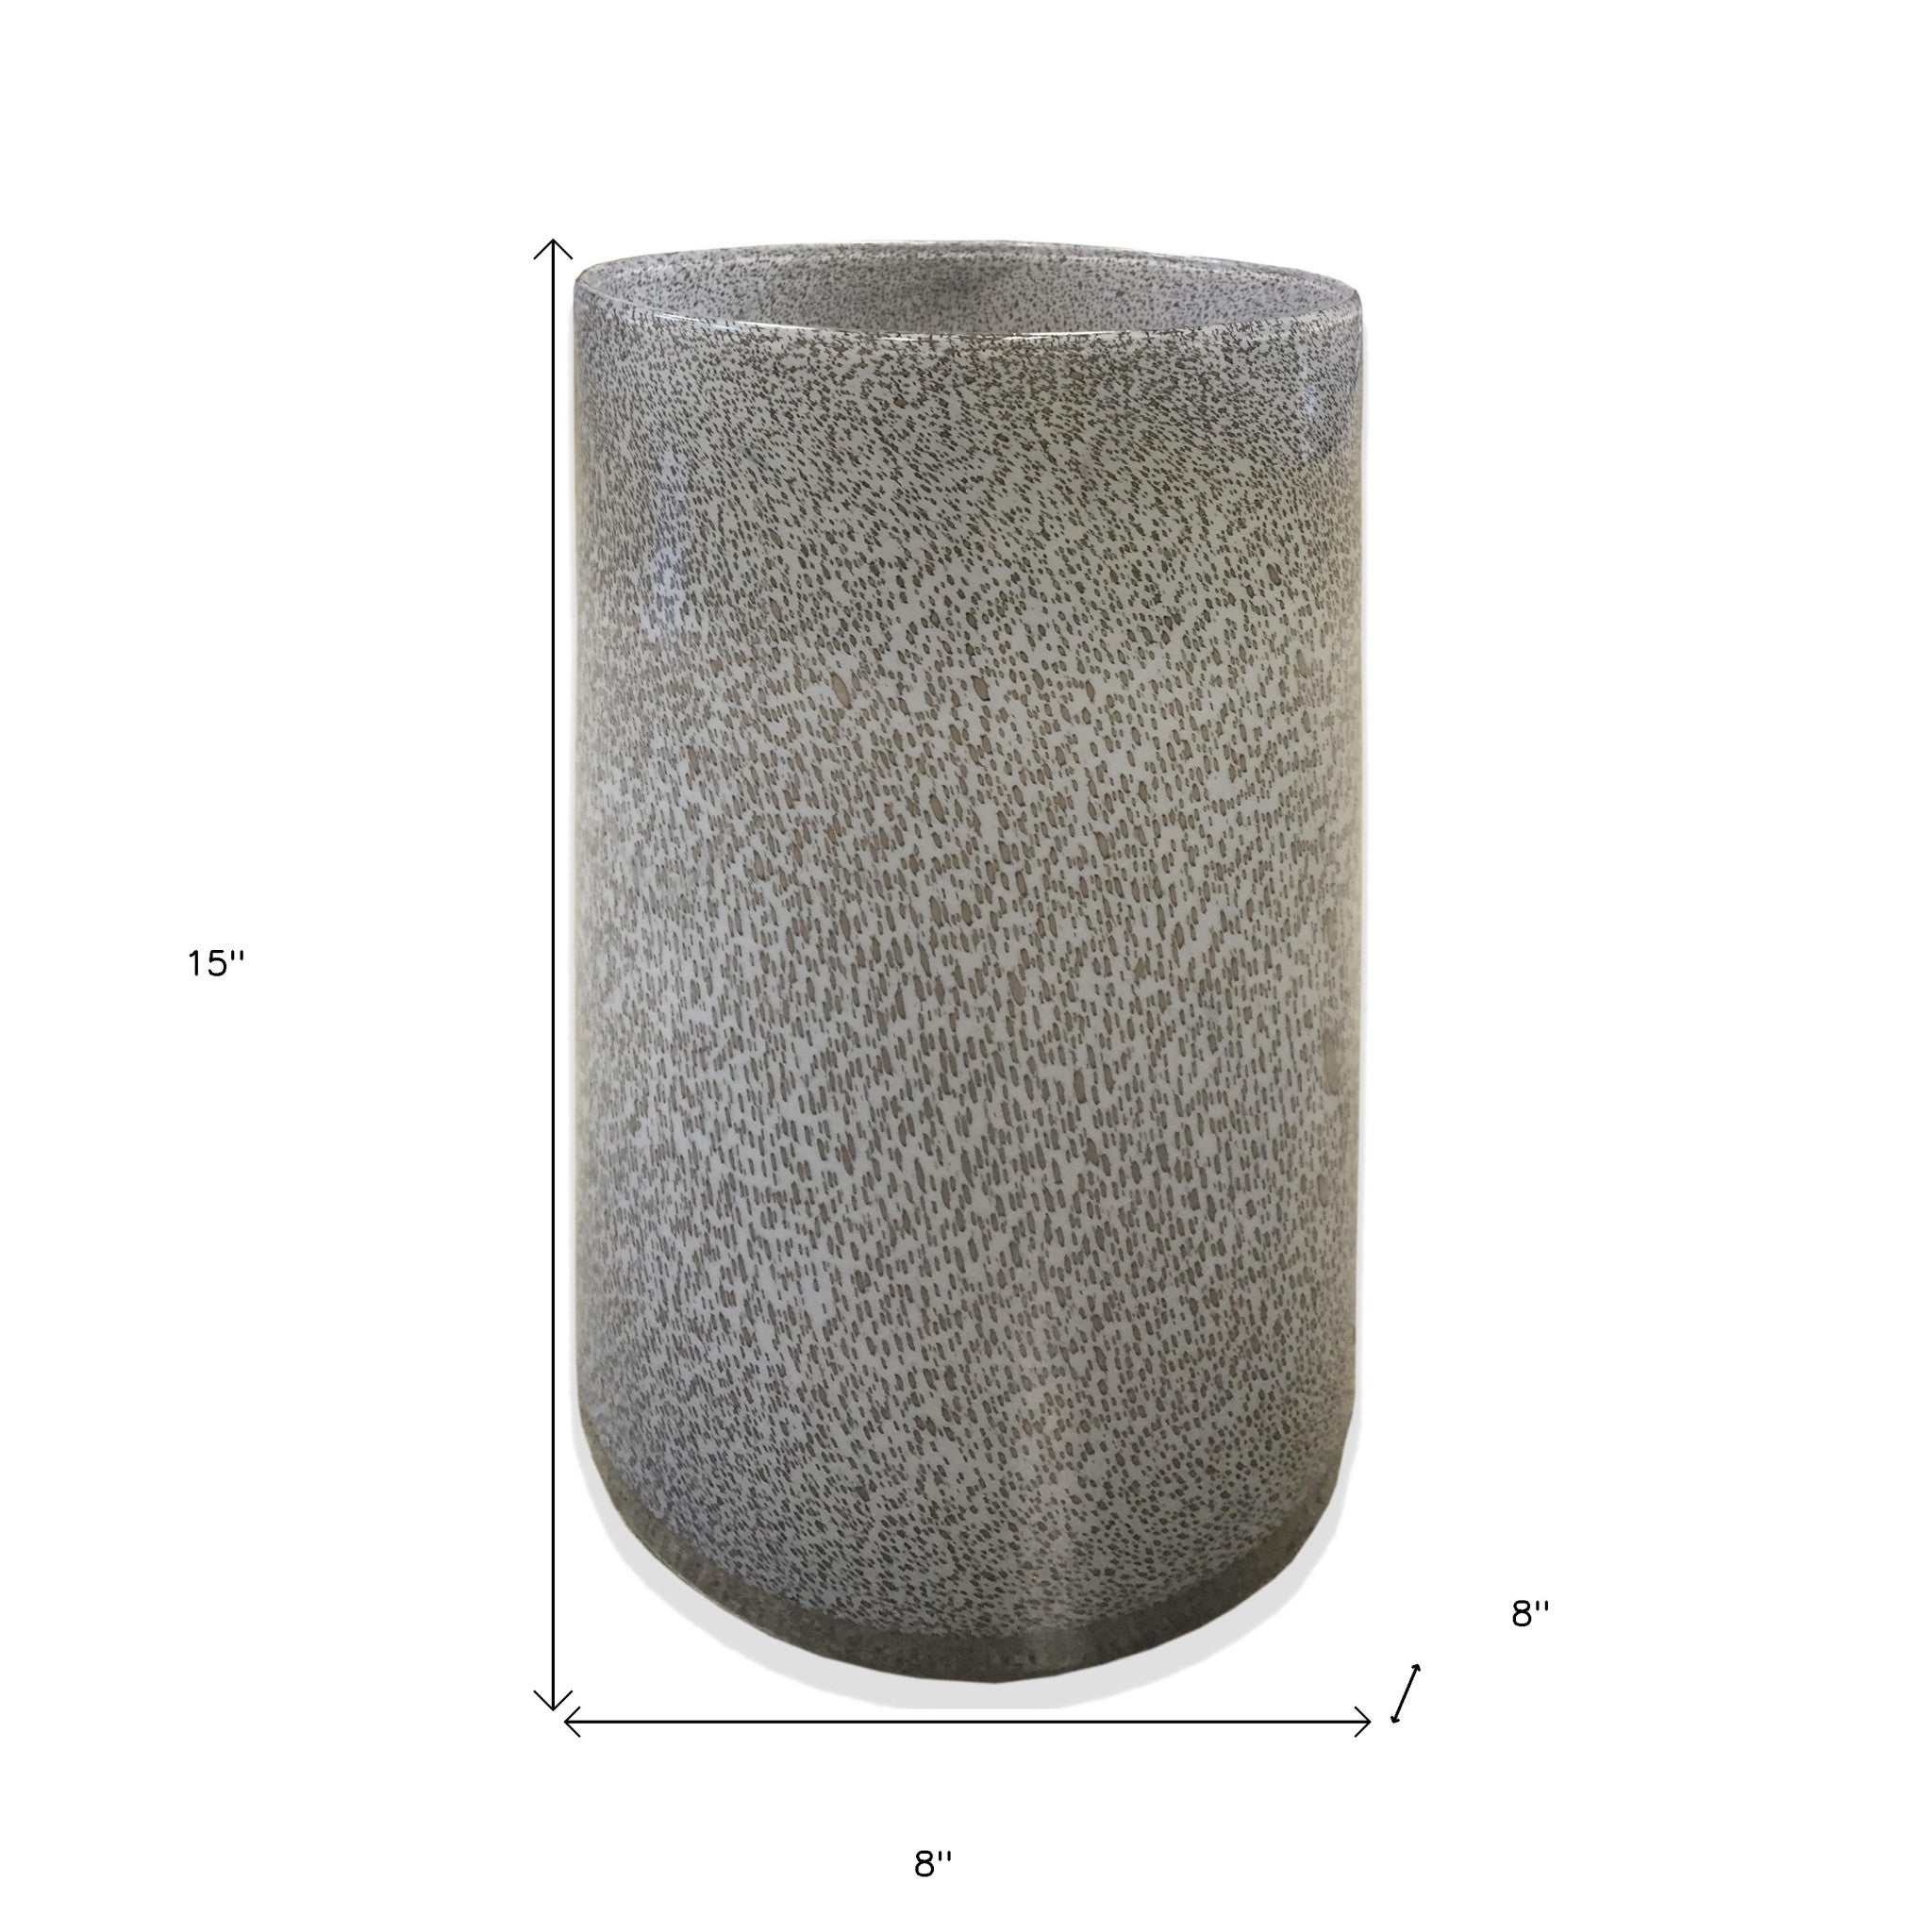 15" Lavender Handblown Speckle Glass Table Vase